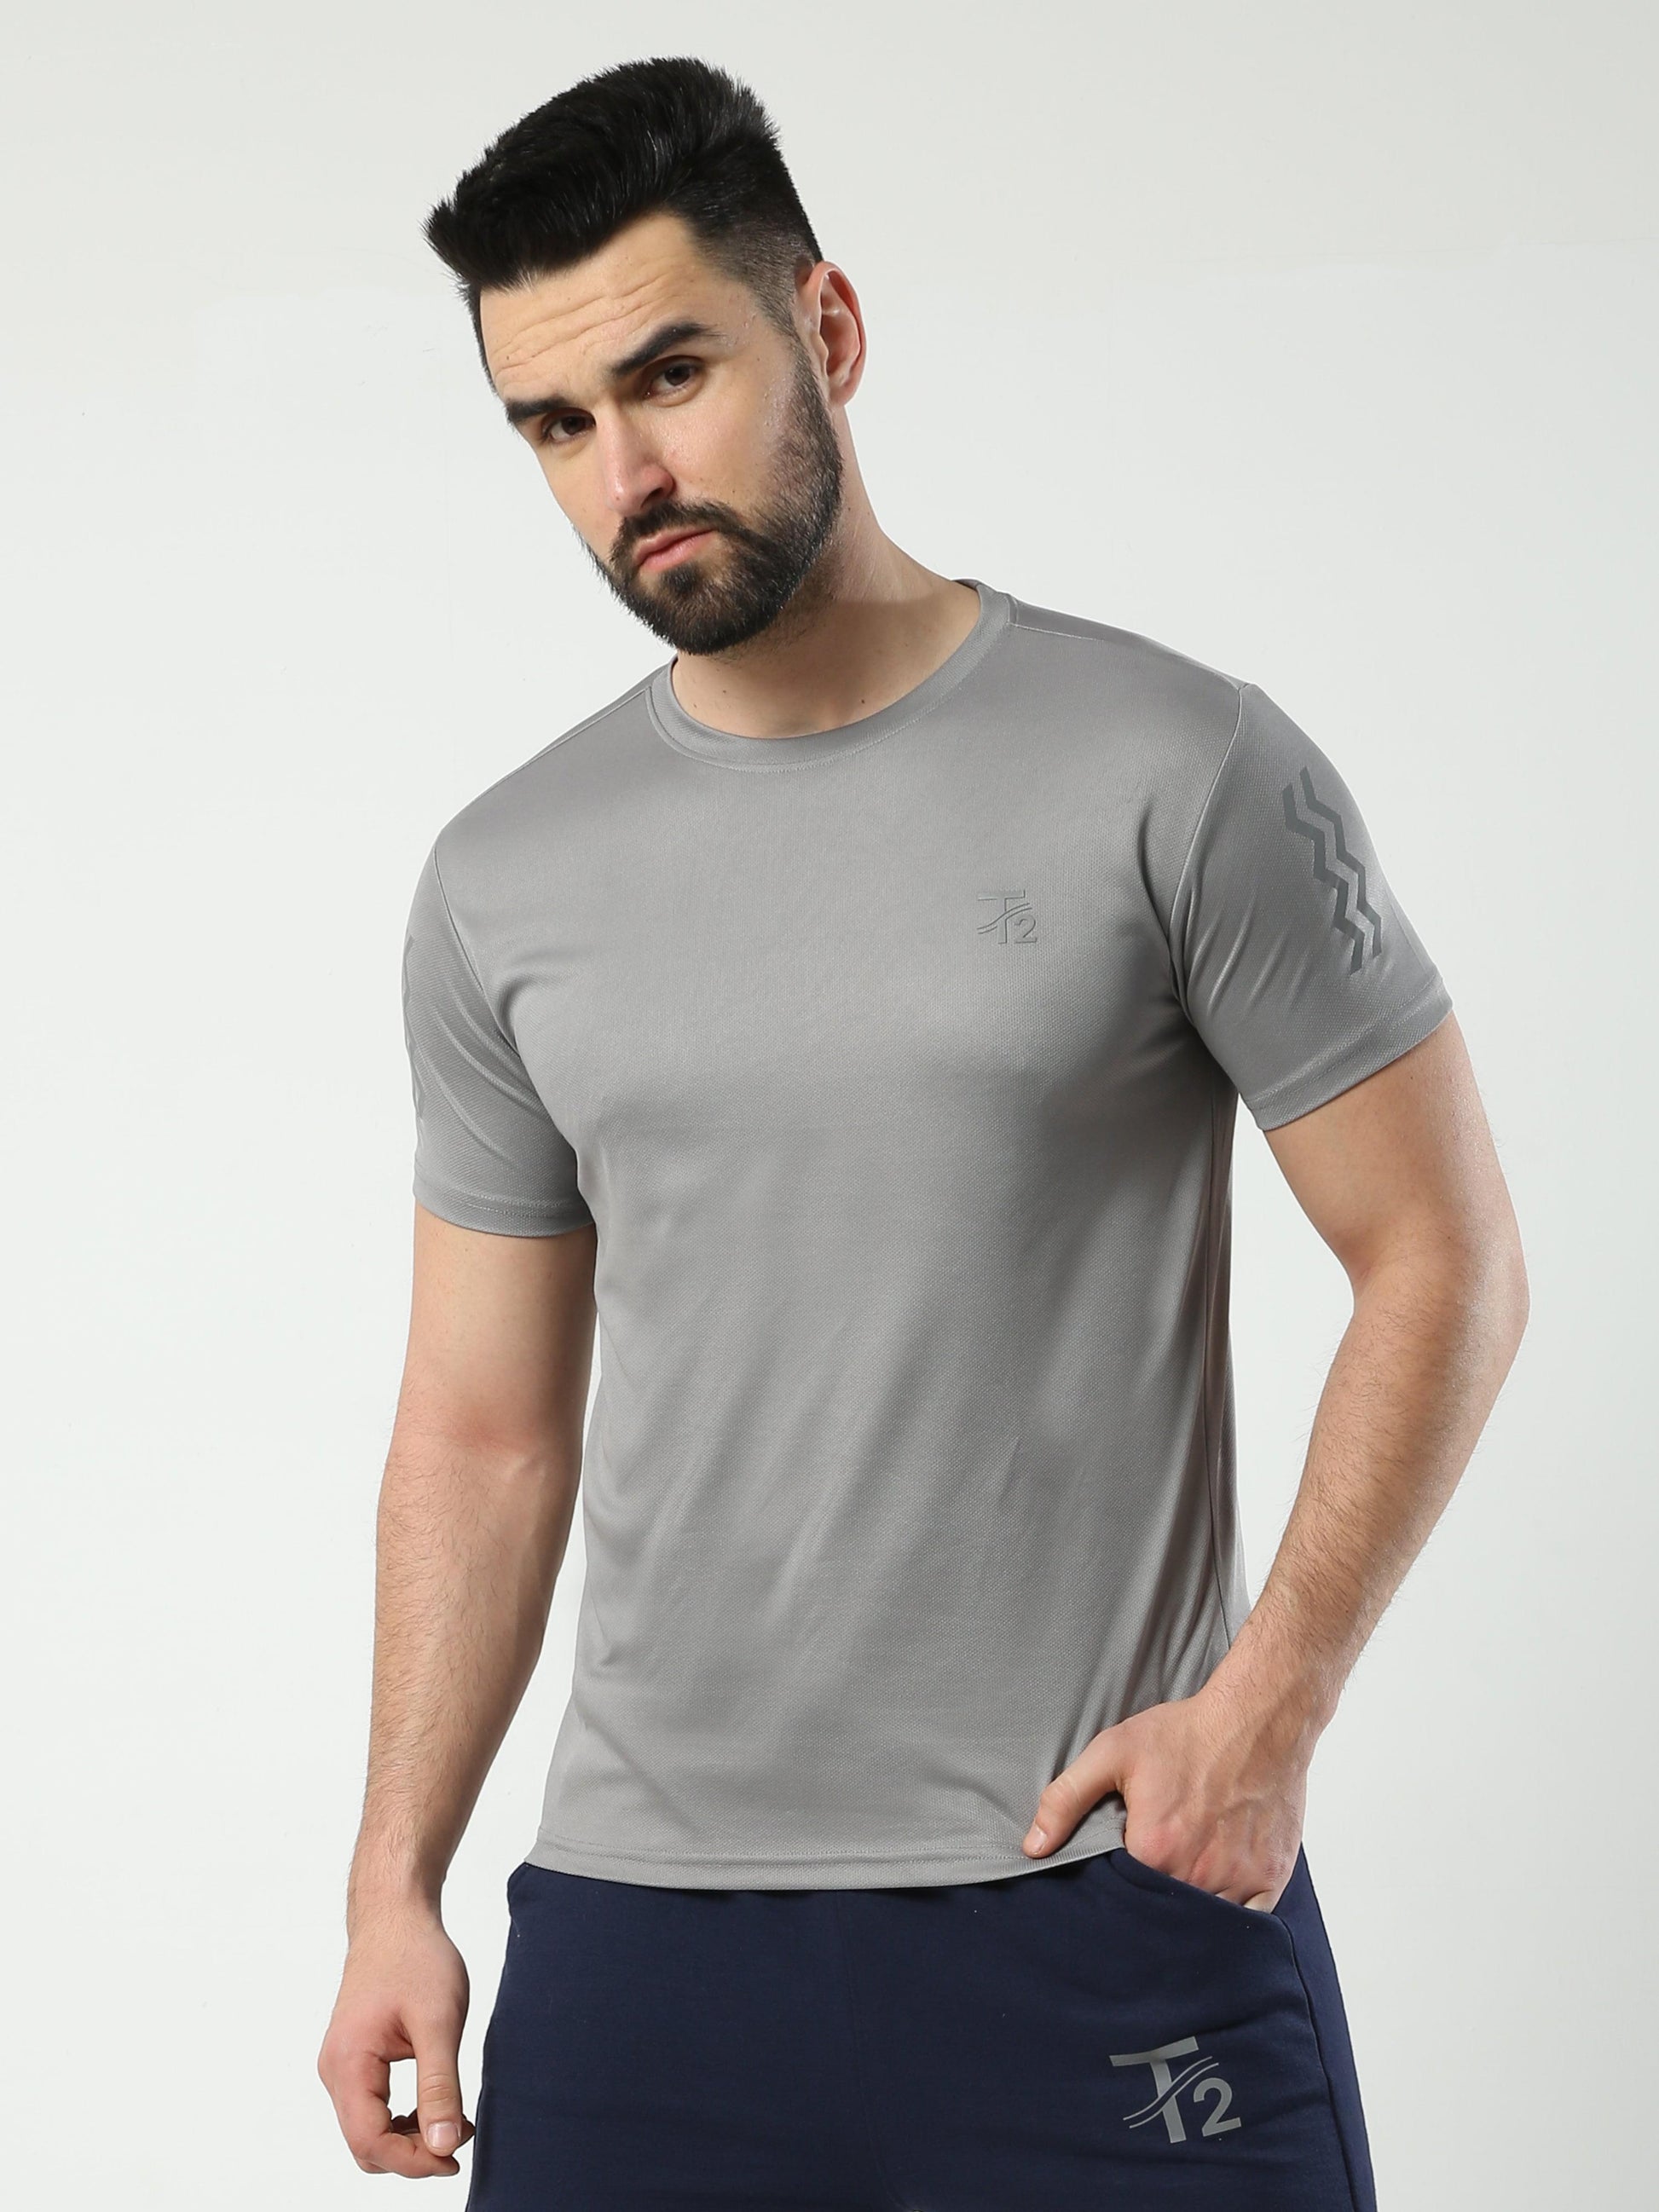 Athleisure Men's Premium T-Shirt - Charcoal